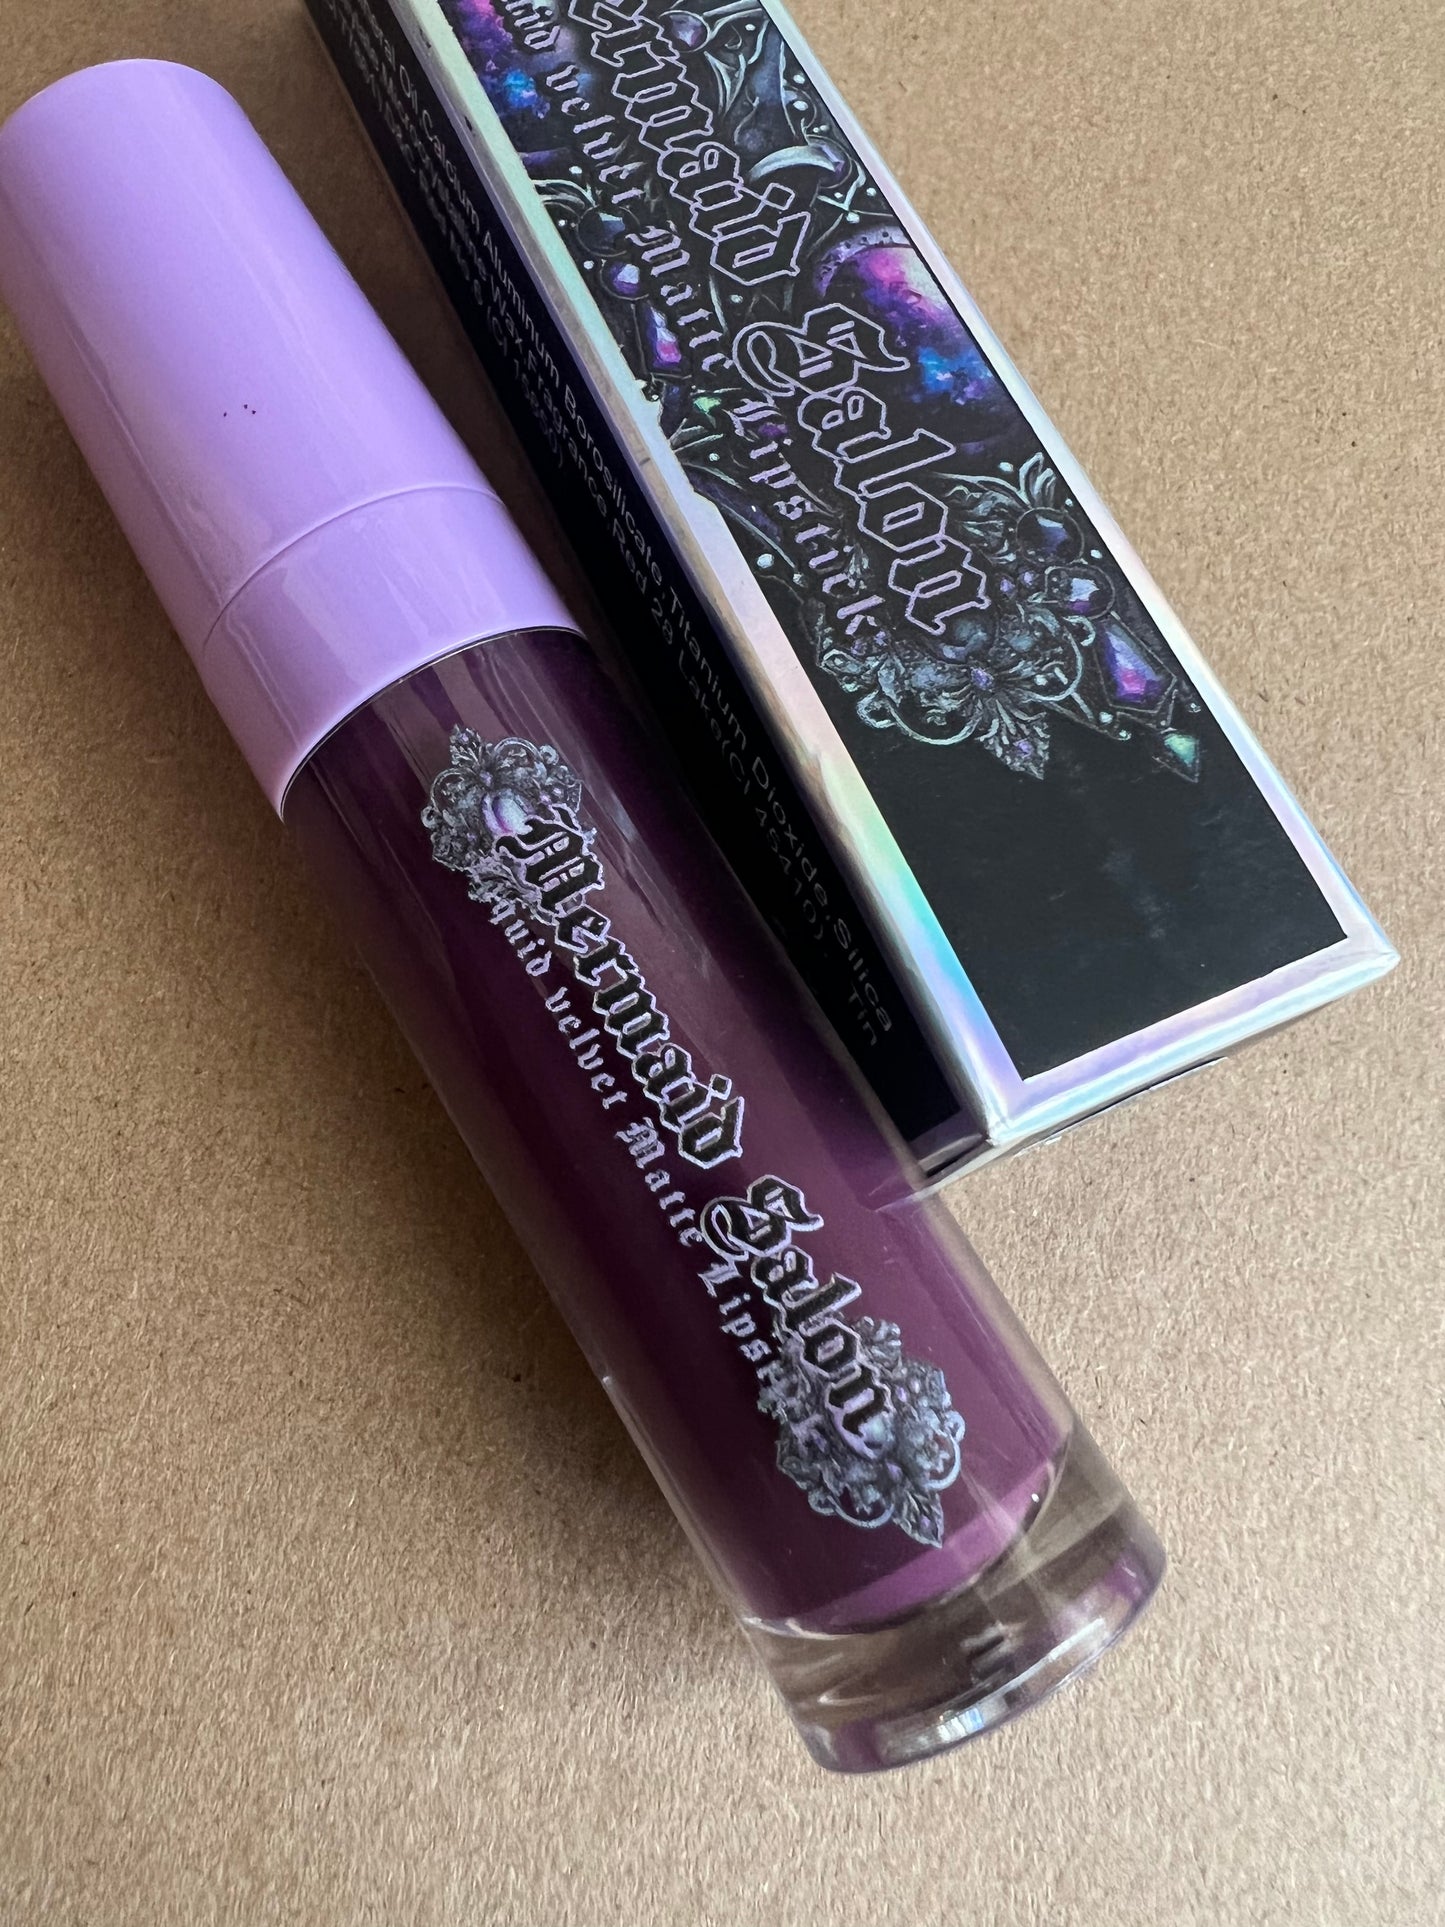 BERRY SHADY - Liquid Velvet Lipstick